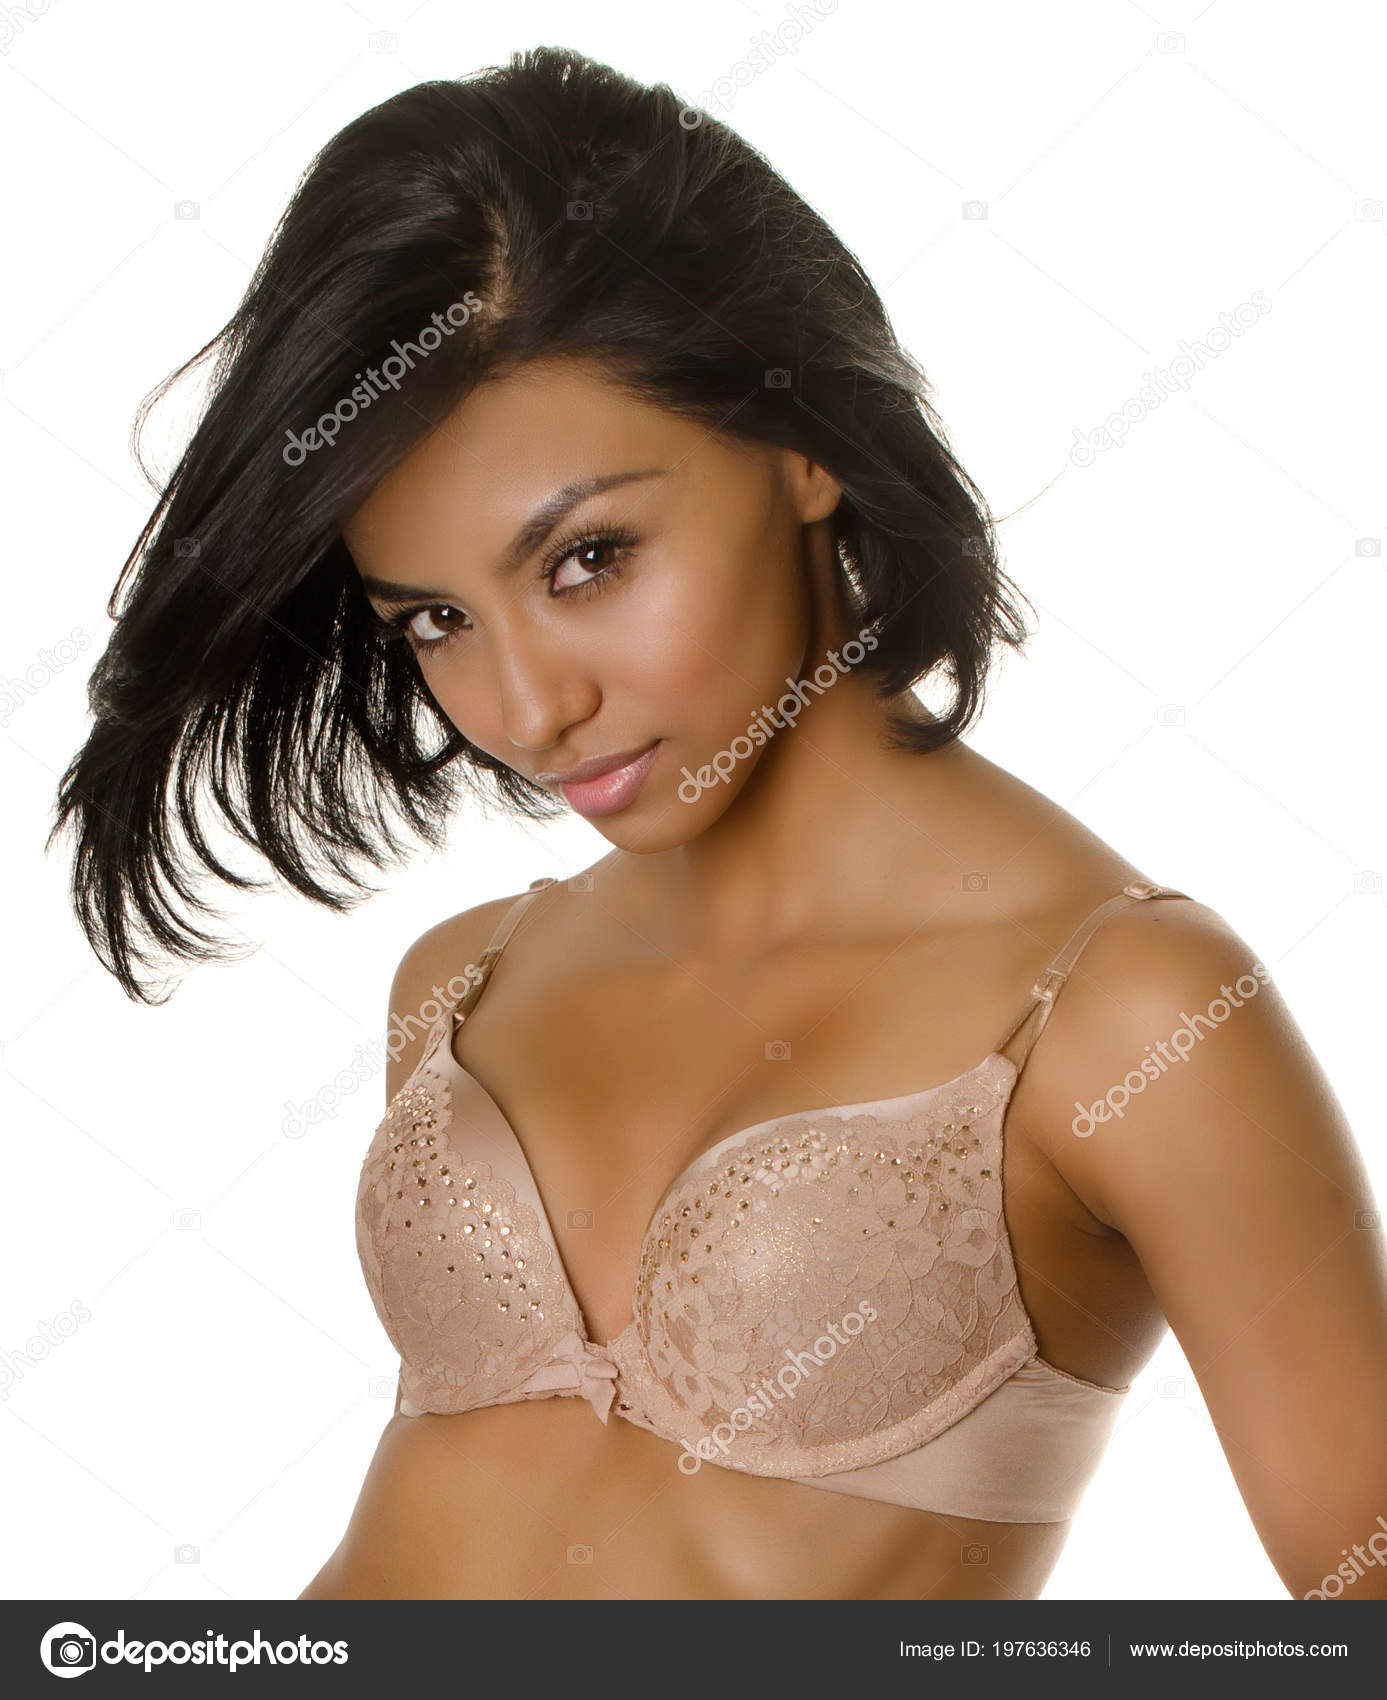 https://st4.depositphotos.com/1323776/19763/i/1600/depositphotos_197636346-stock-photo-beautiful-woman-wearing-bra.jpg